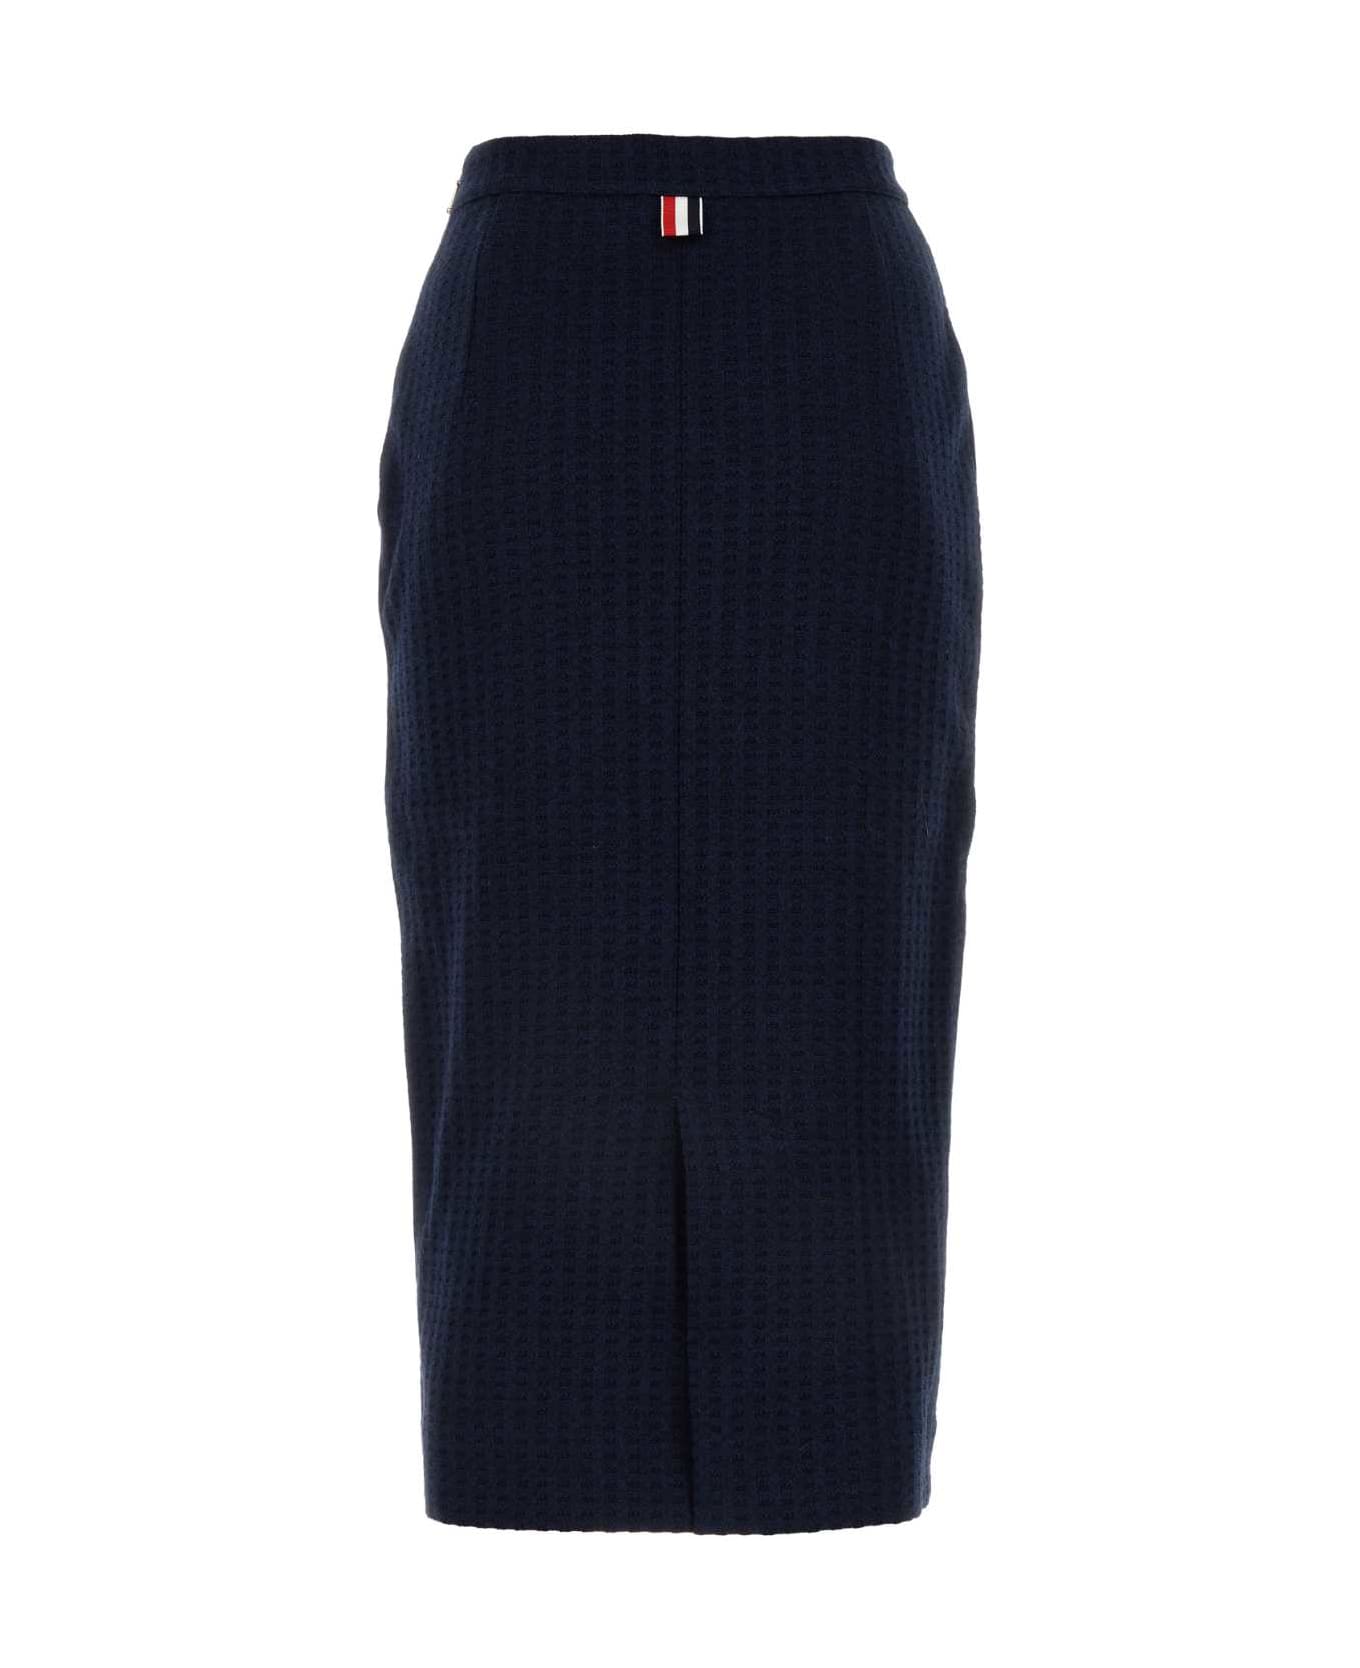 Thom Browne Melange Navy Blue Cotton Skirt - NAVY